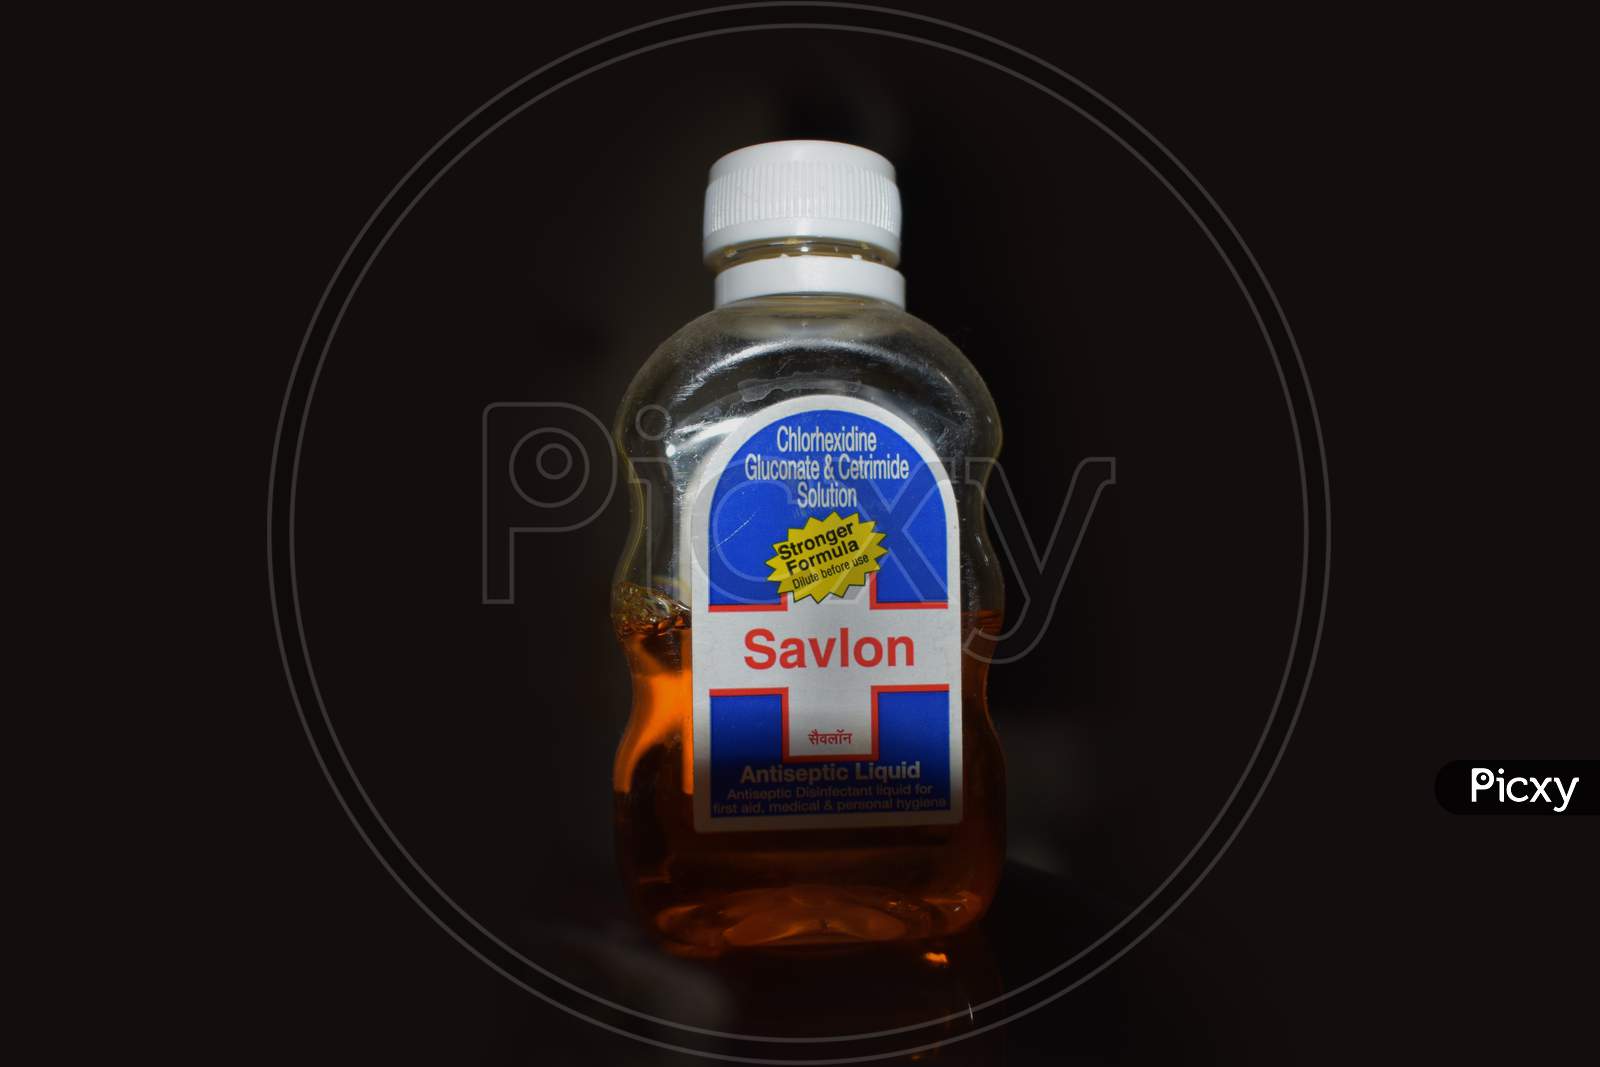 Savlon antiseptic liquid bottle.